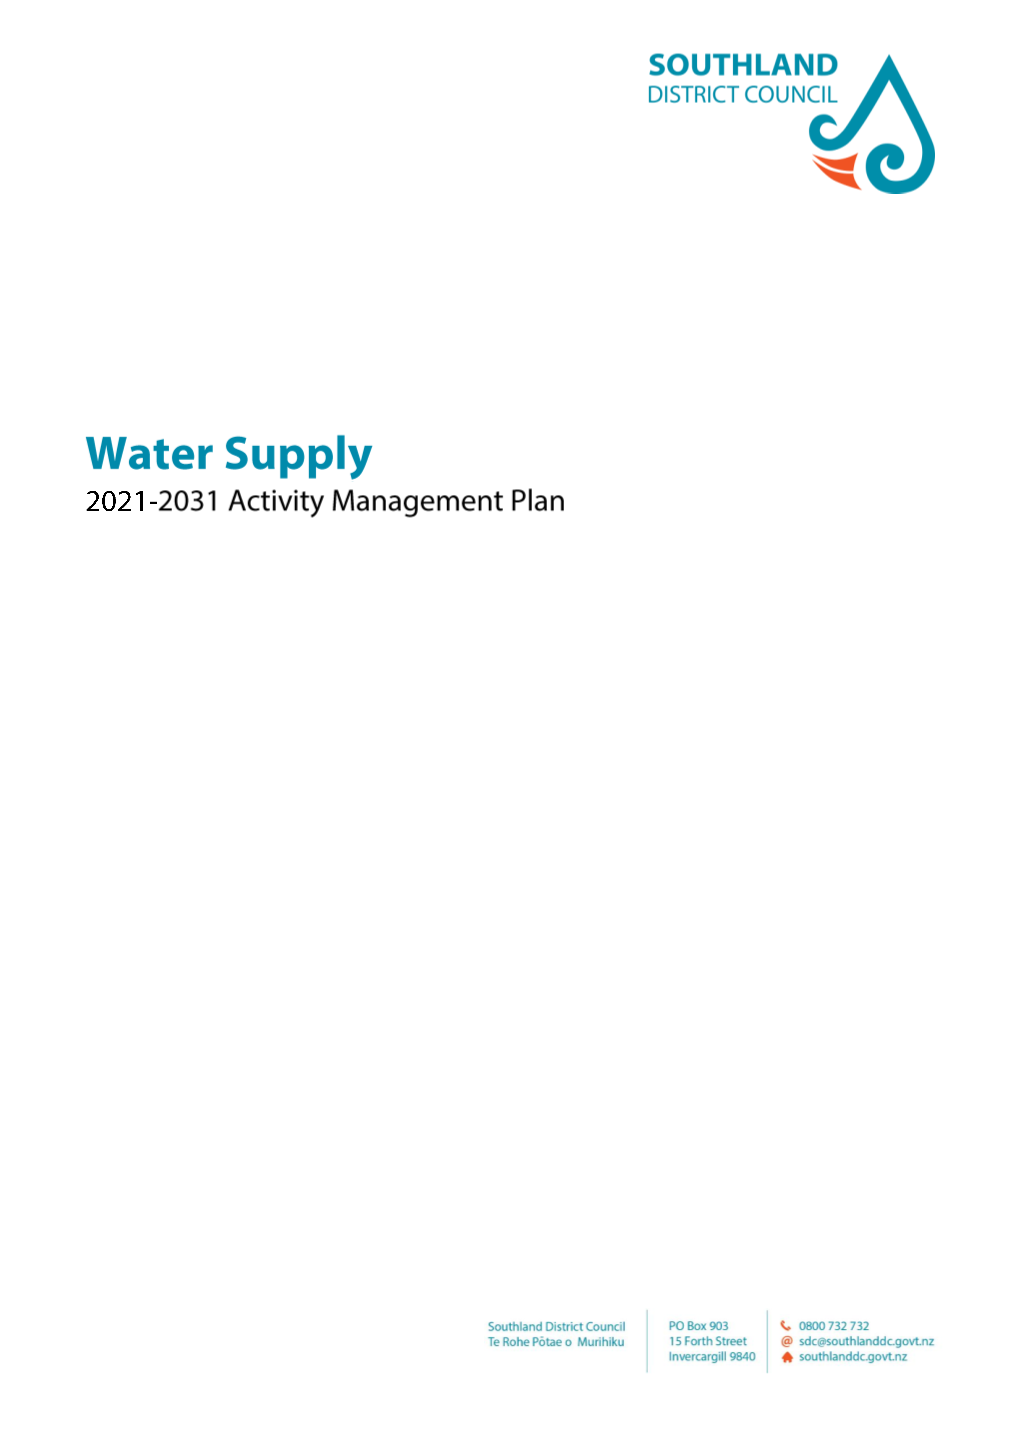 Water Supply Activity